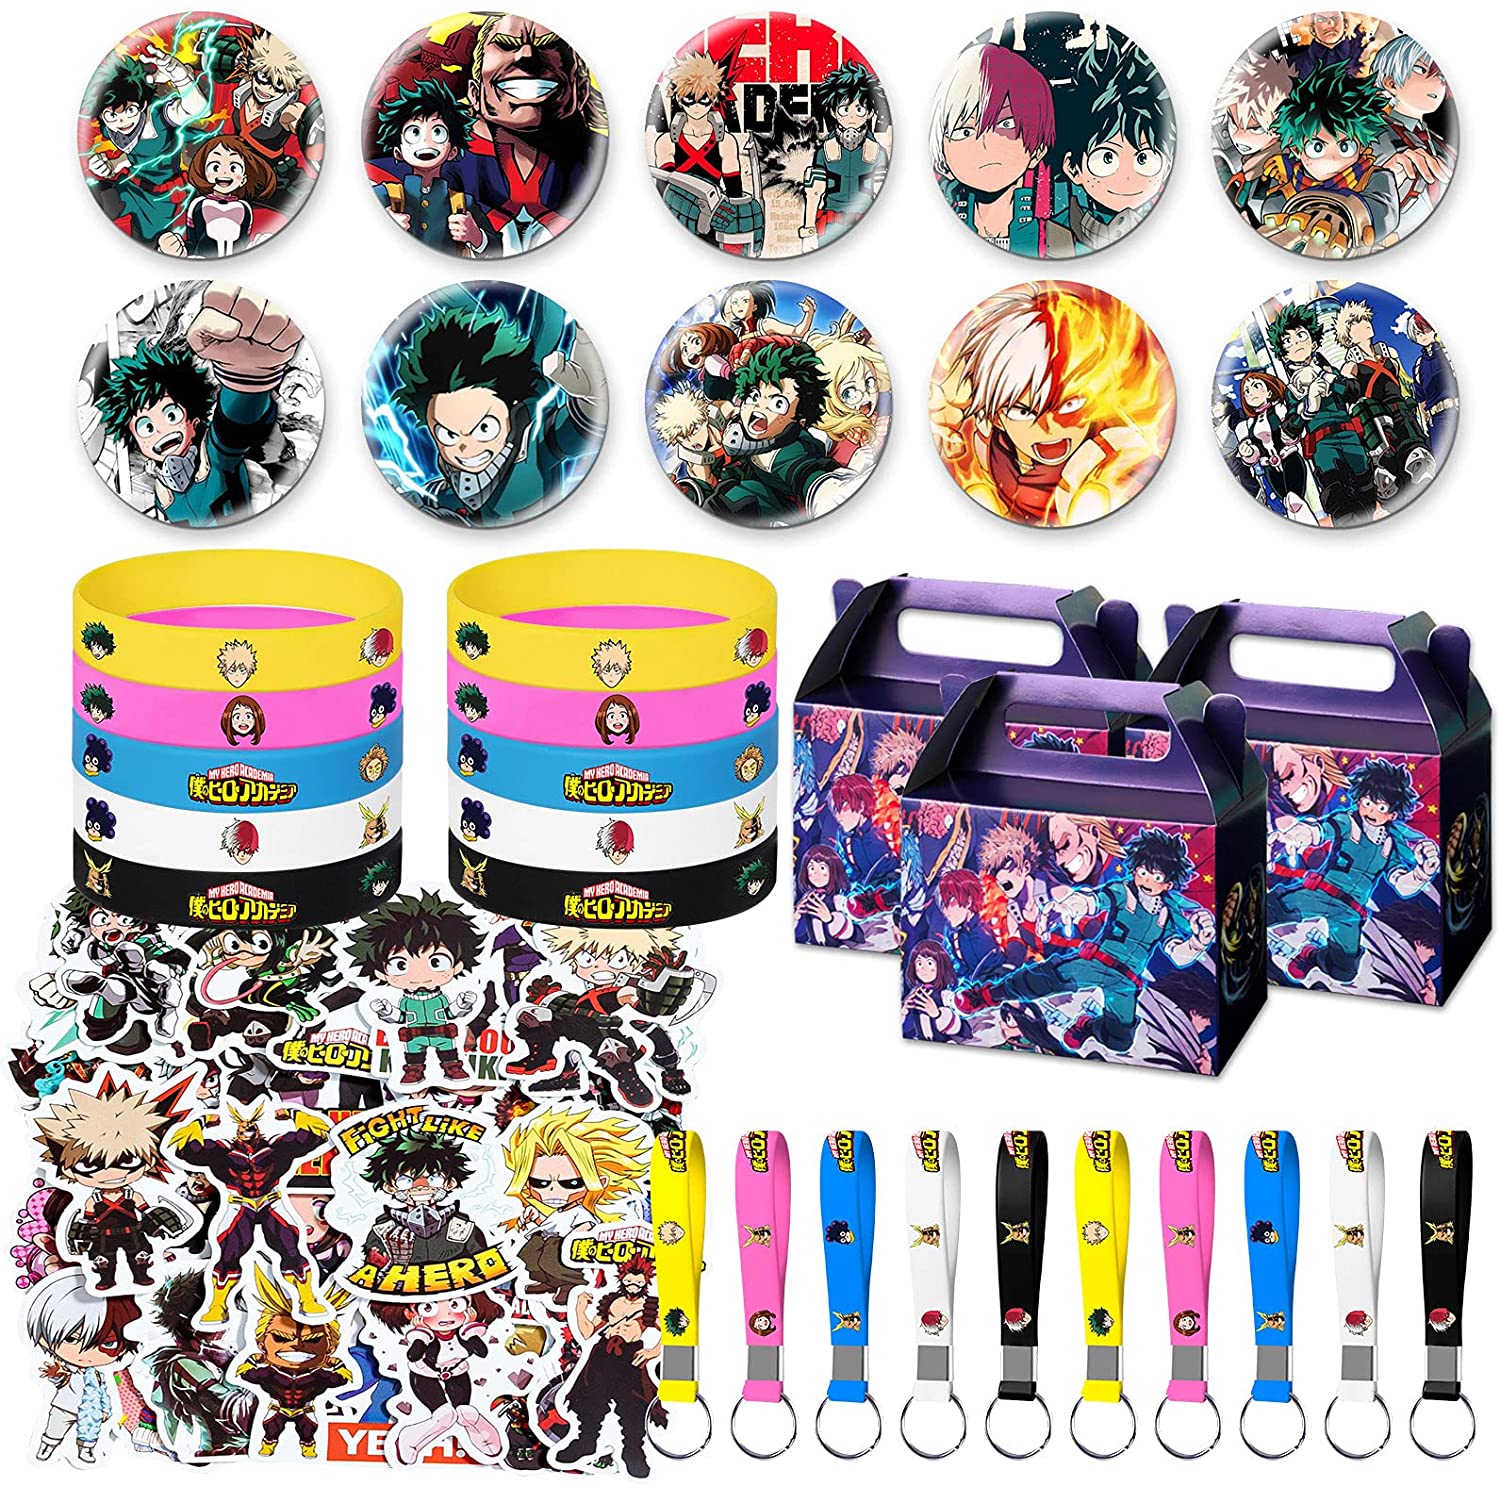 Discover the Magic: AnimeGiftBox's Anime-Inspired Gift Selection